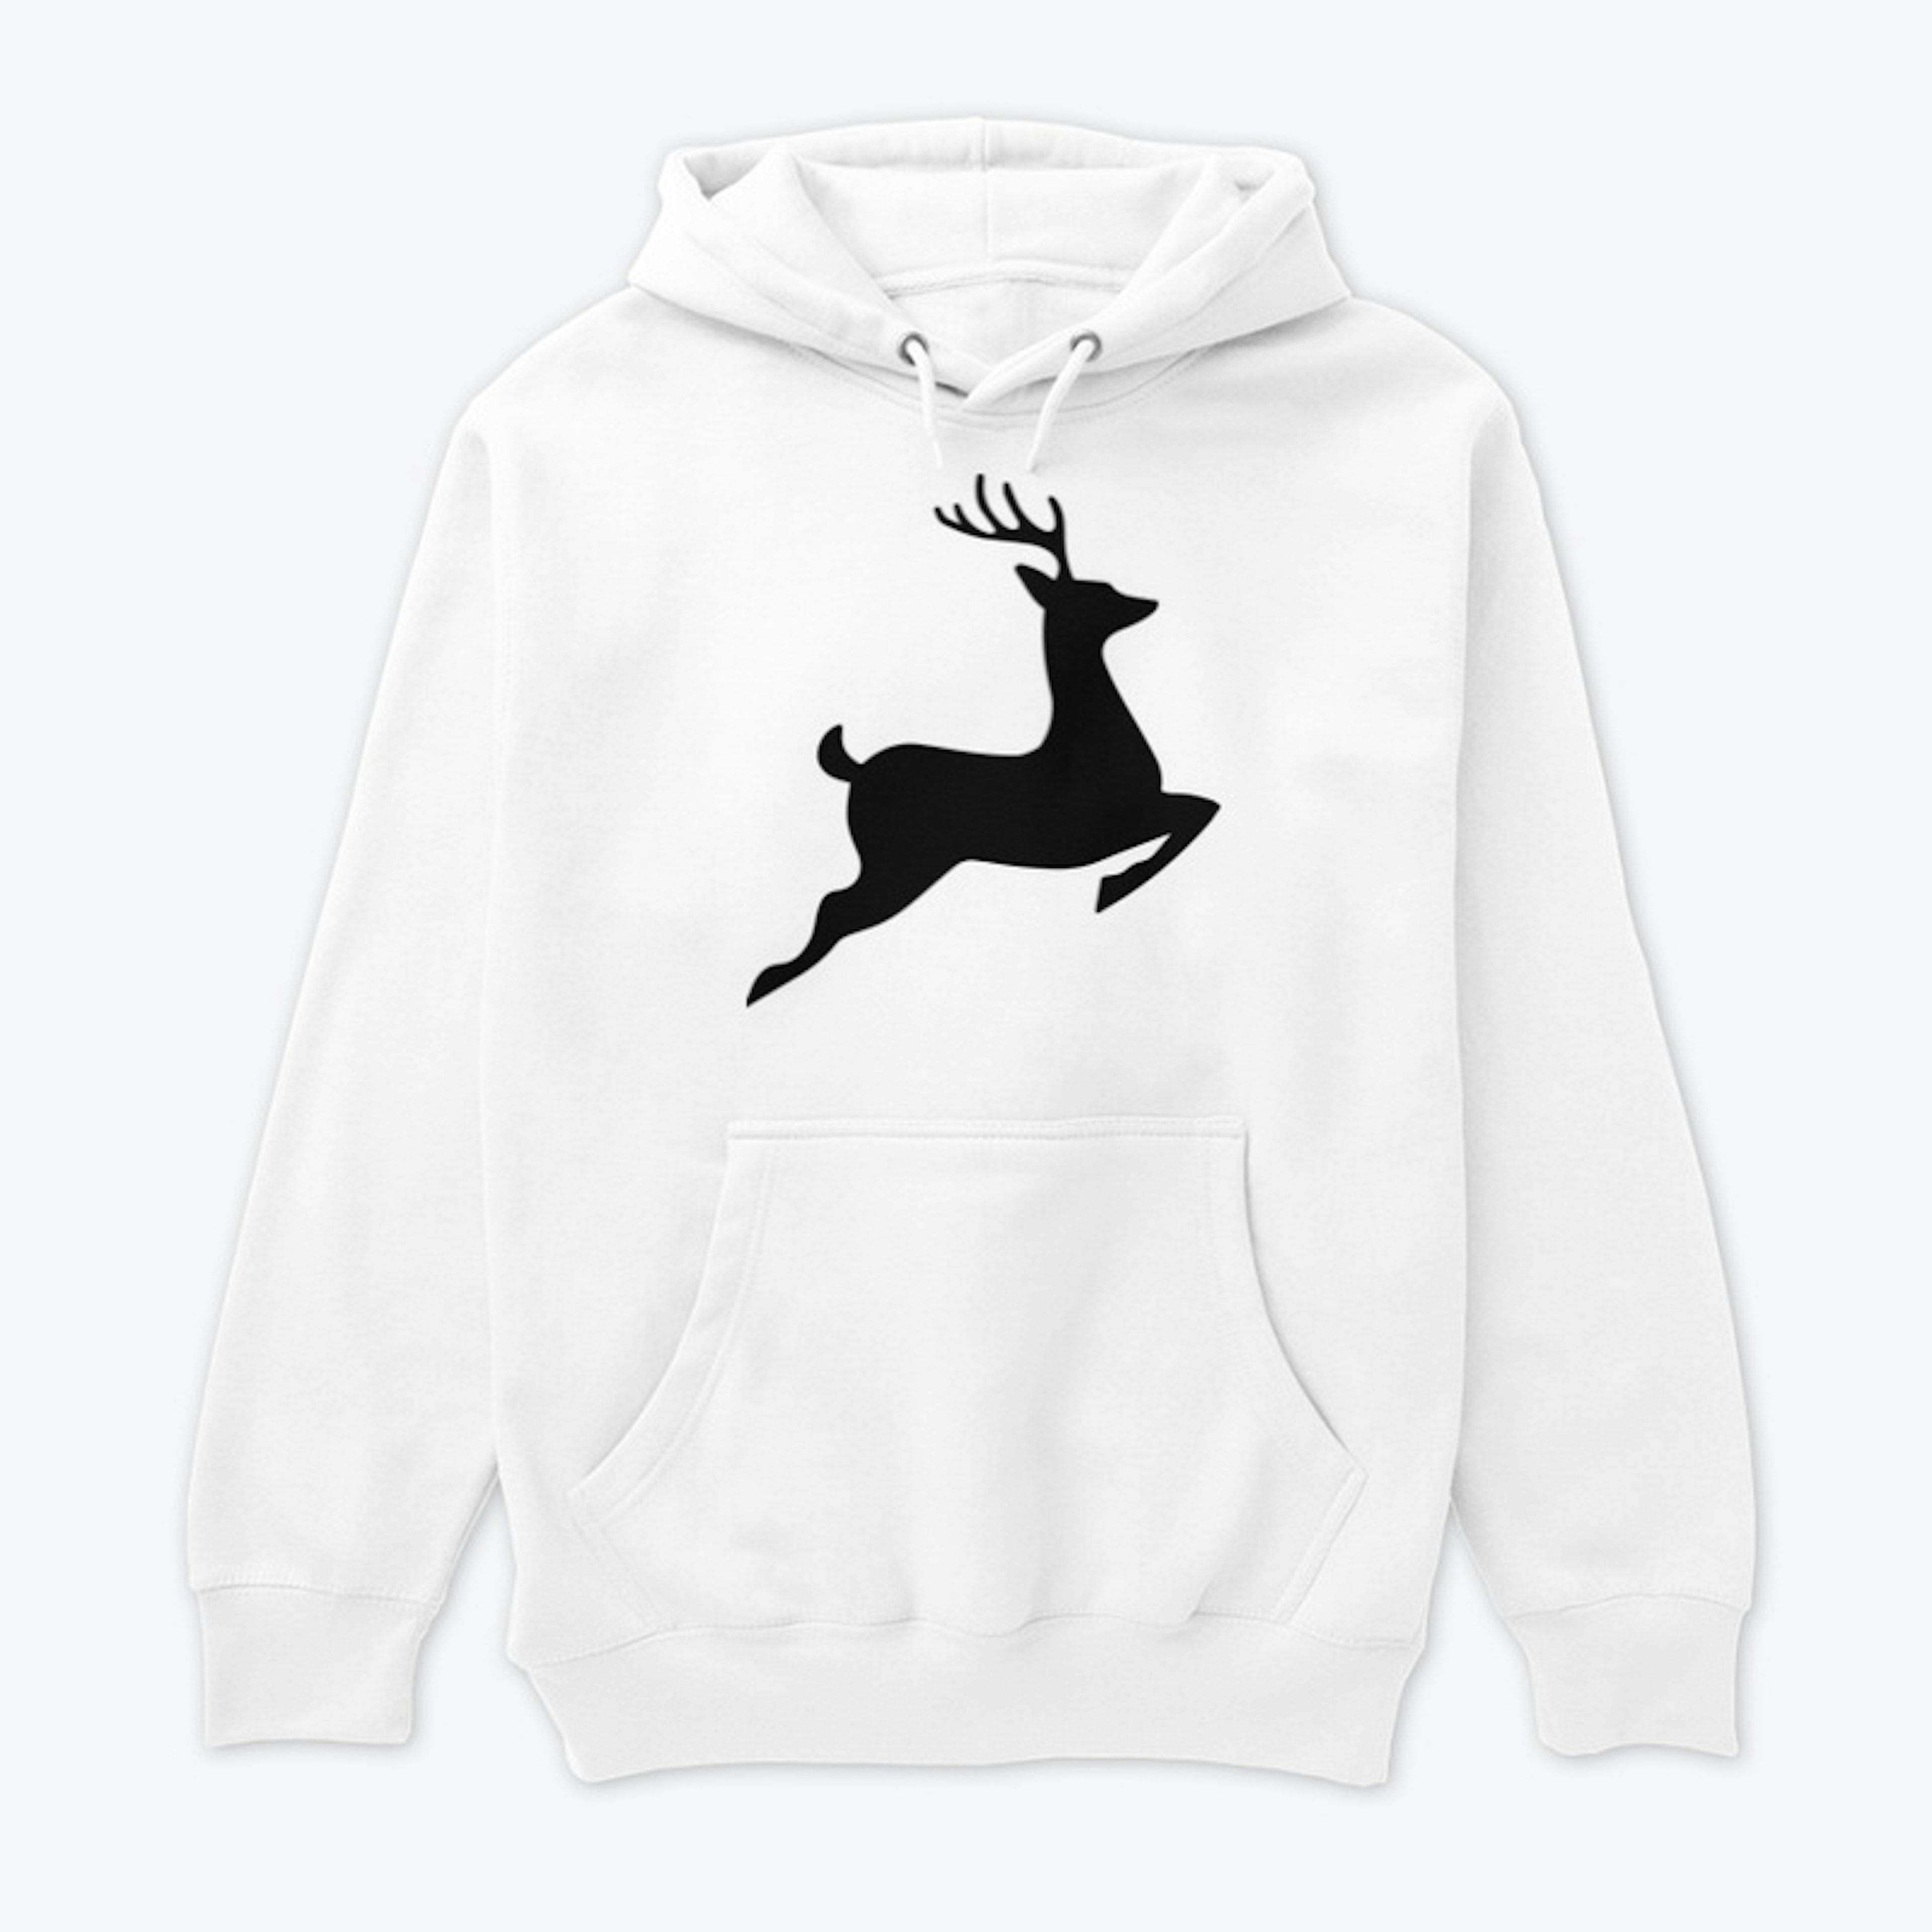 The Deer clothing